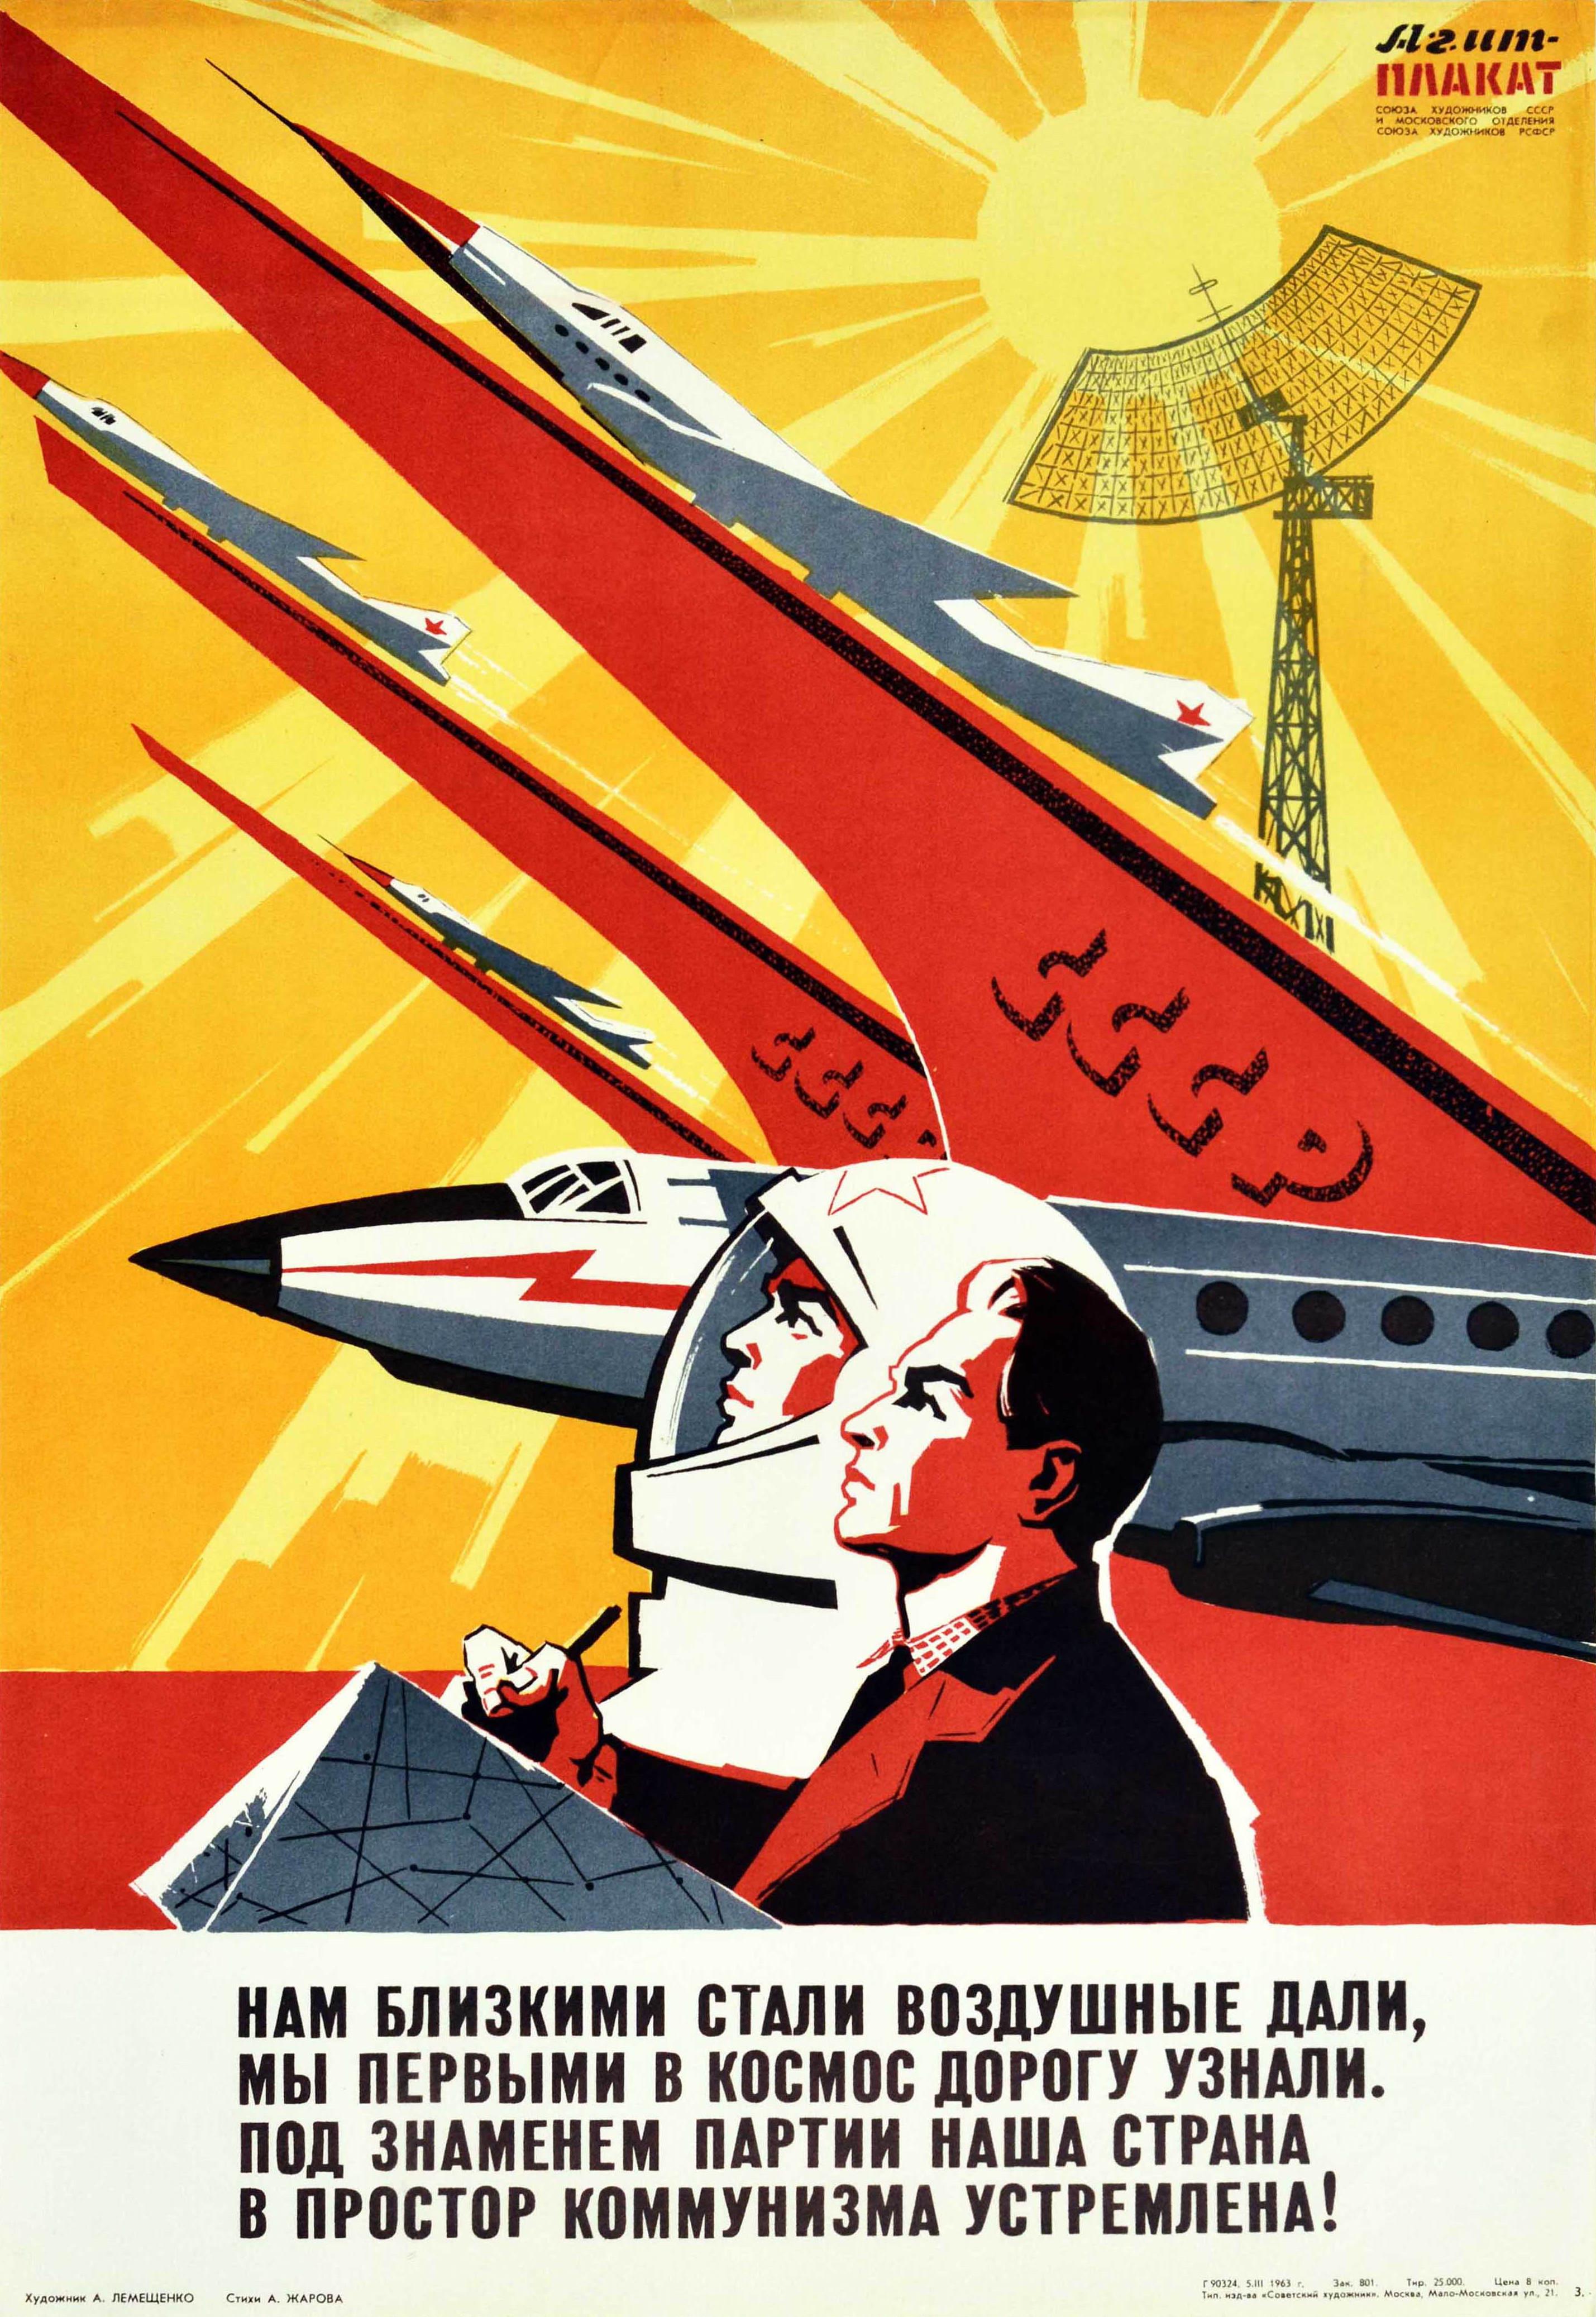 A. Lemeshchenko Print - Original Vintage Soviet Propaganda Poster Towards Expanse Of Communism Cosmonaut